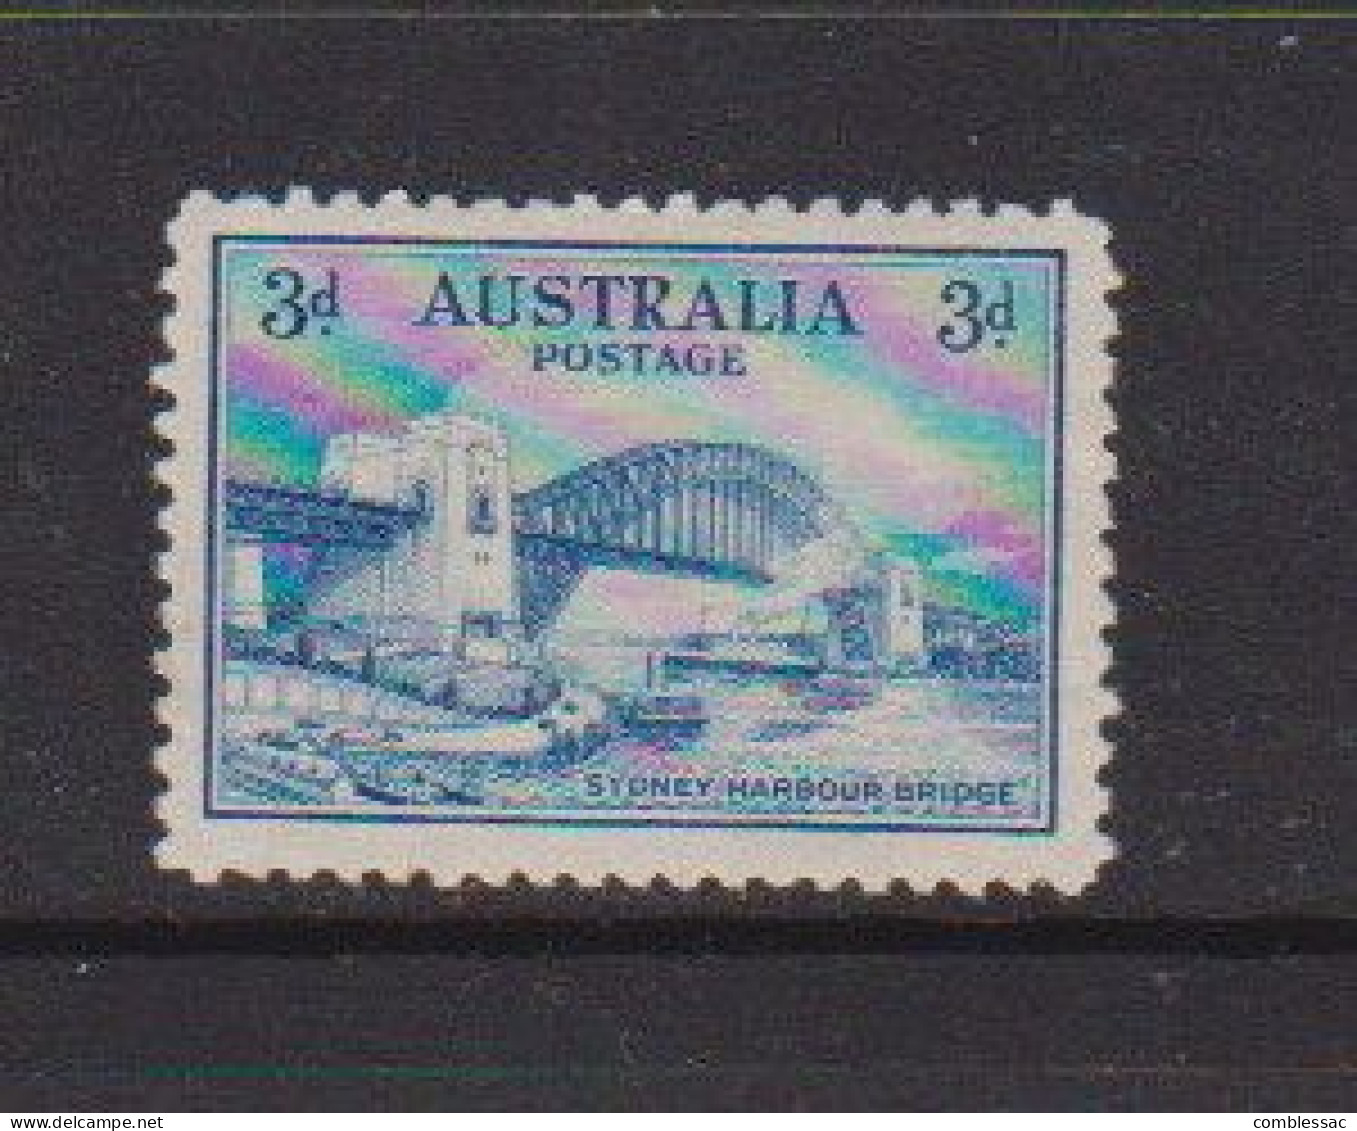 AUSTRALIA    1932     Opening  Of  Sydney  Harbour  Bridge    3d Blue    MH - Nuevos